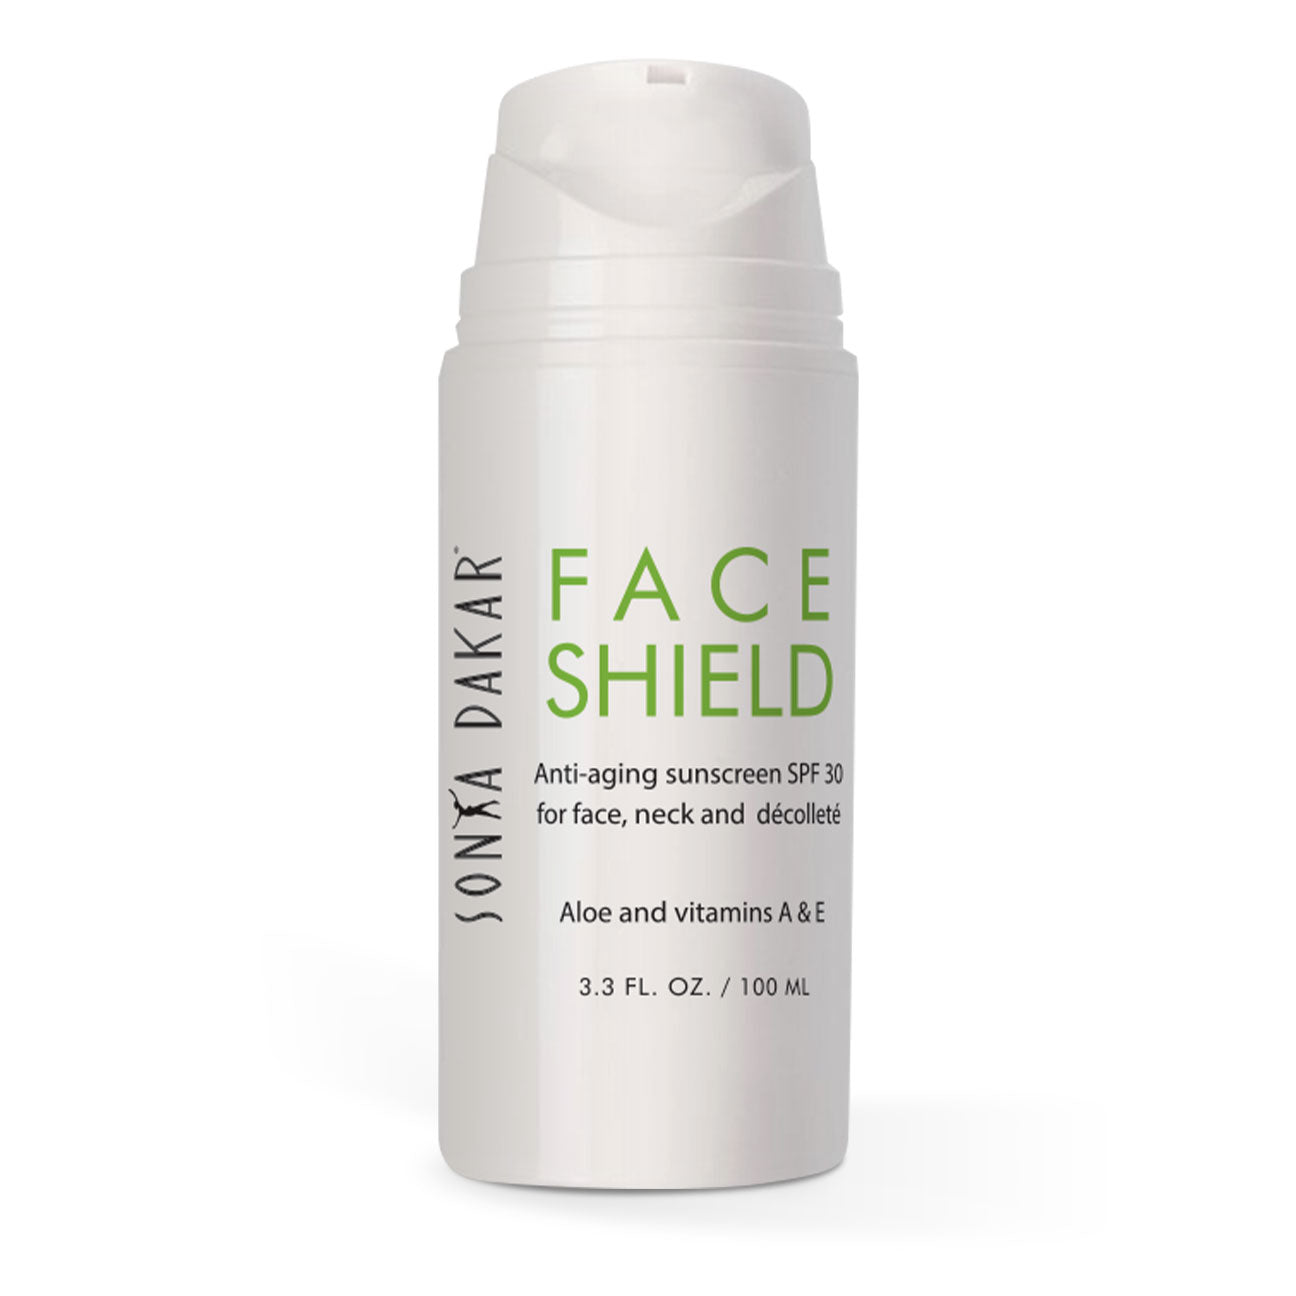 Face Shield daily SPF 30 sunscreen with aloe and vitamin A & E